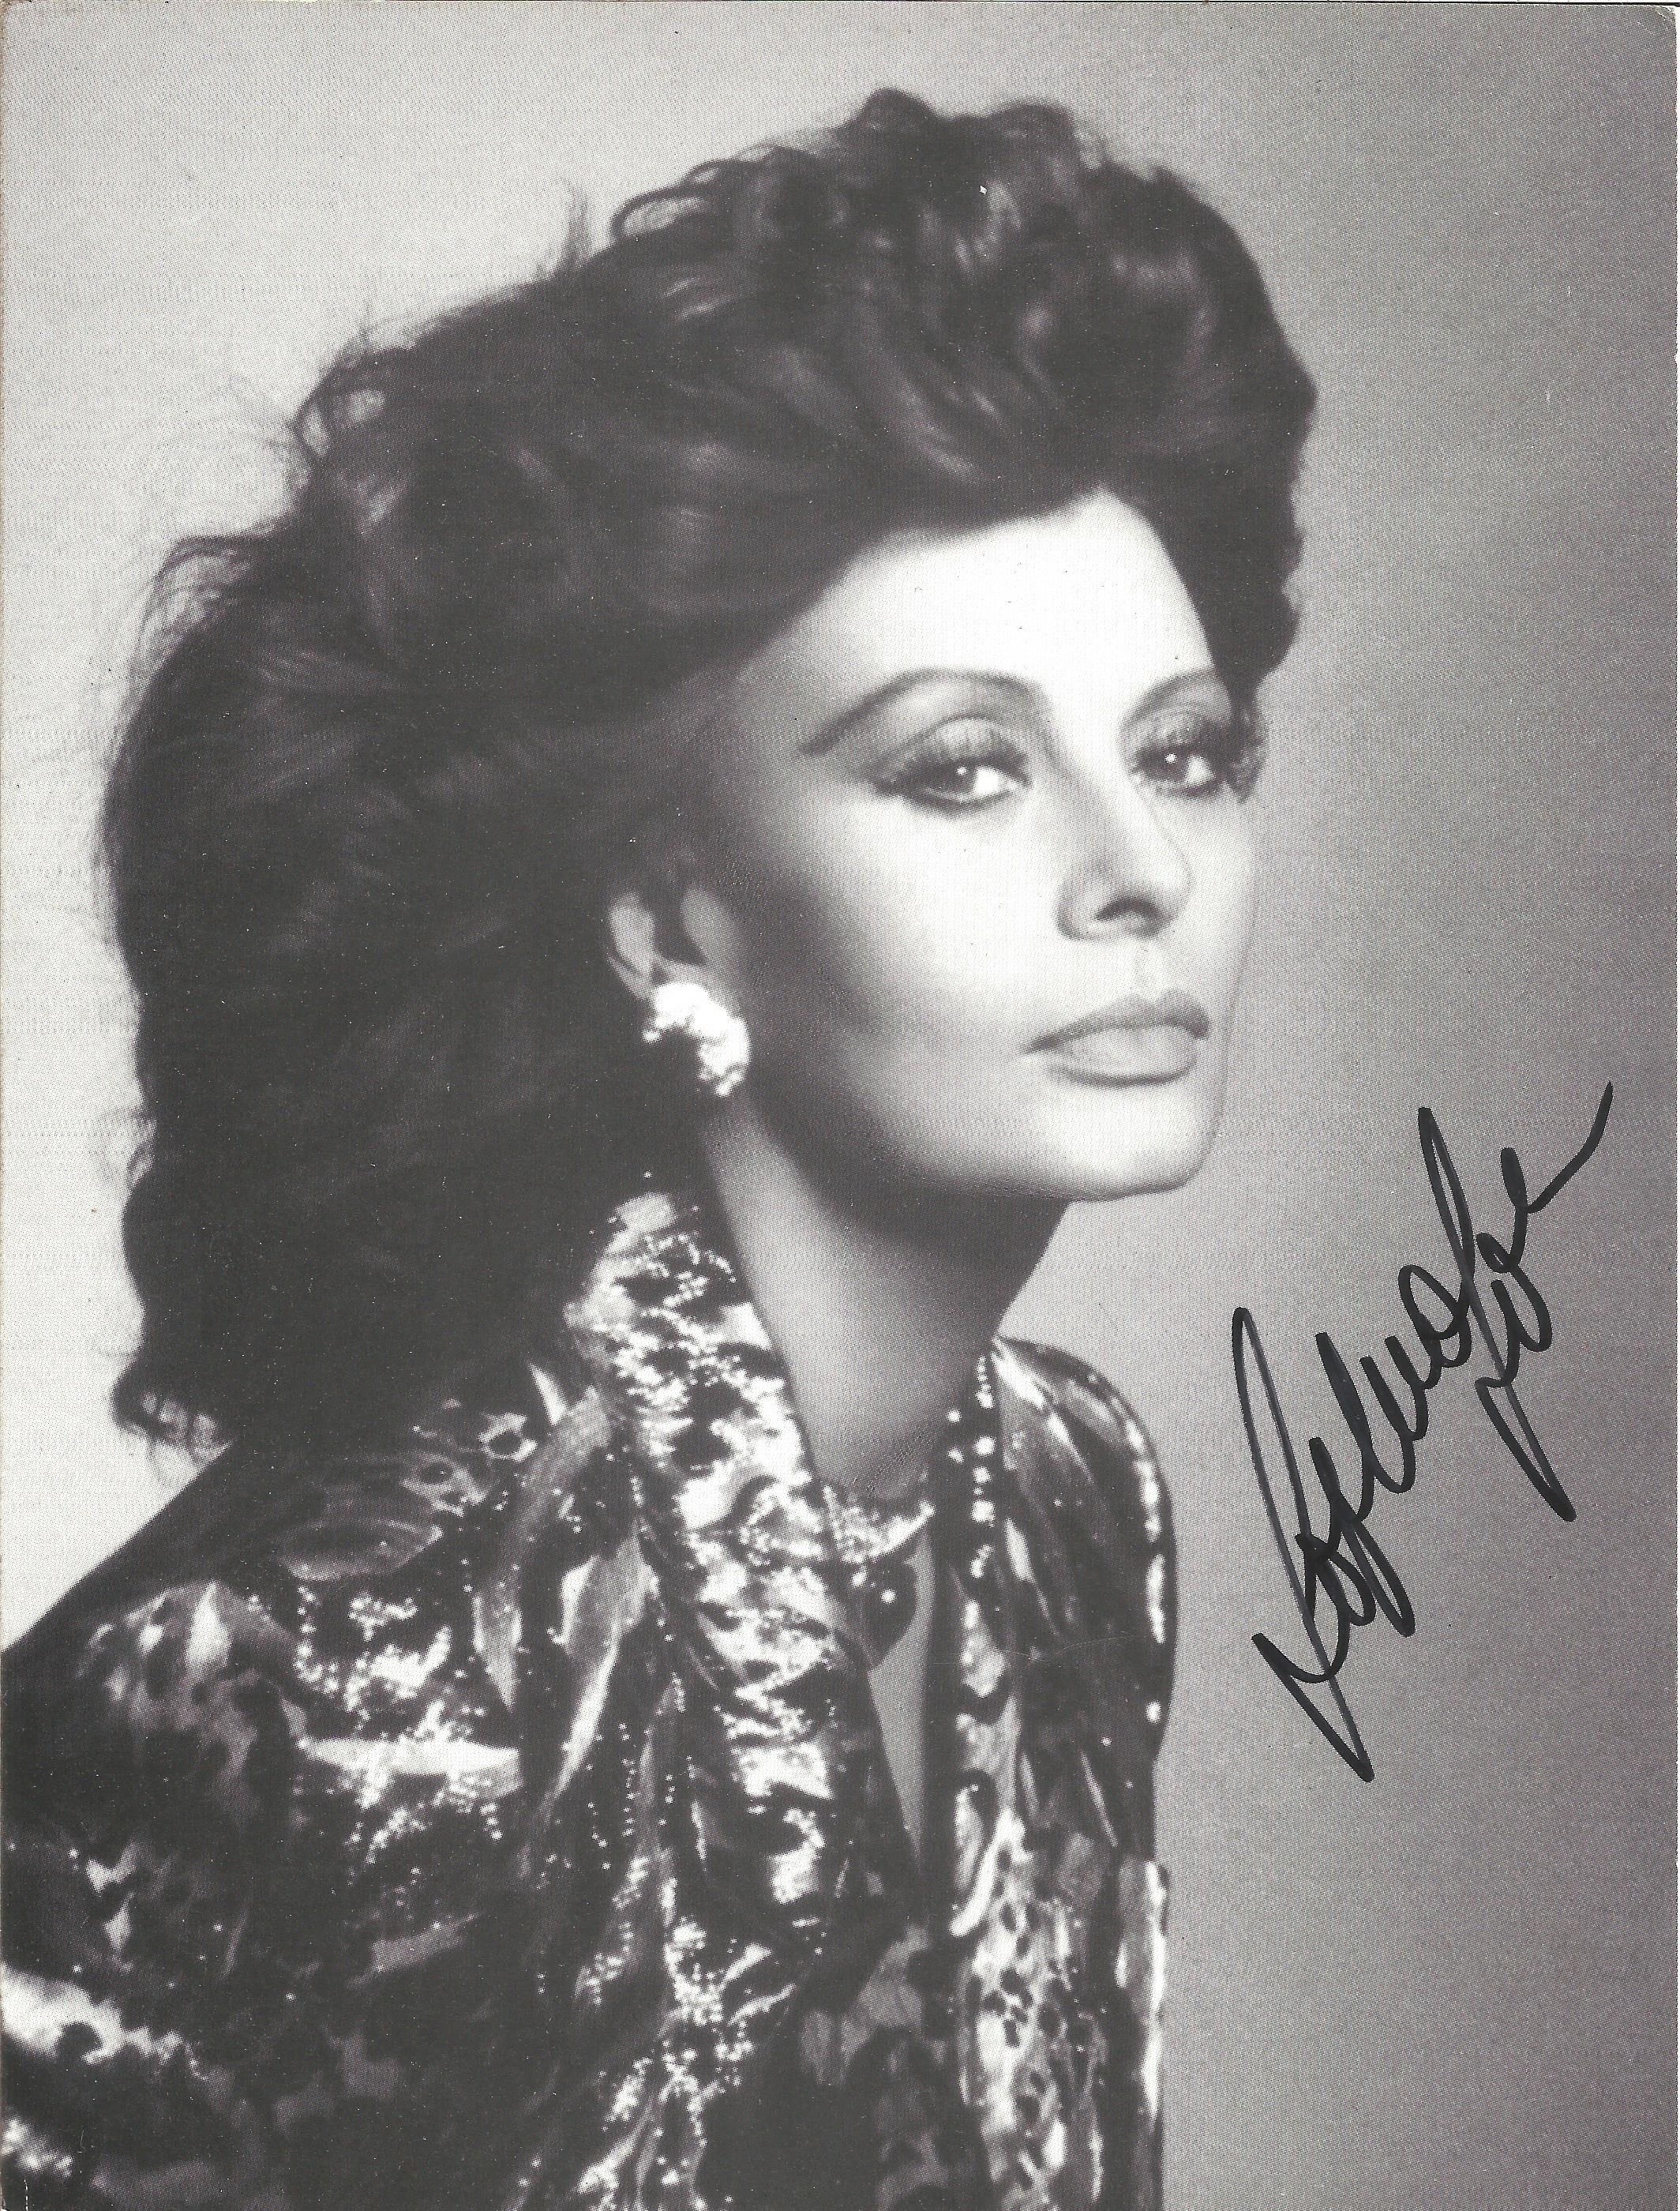 Sophia Loren signed 8 x 6 inch b/w portrait photo. Good Condition. All autographs are genuine hand